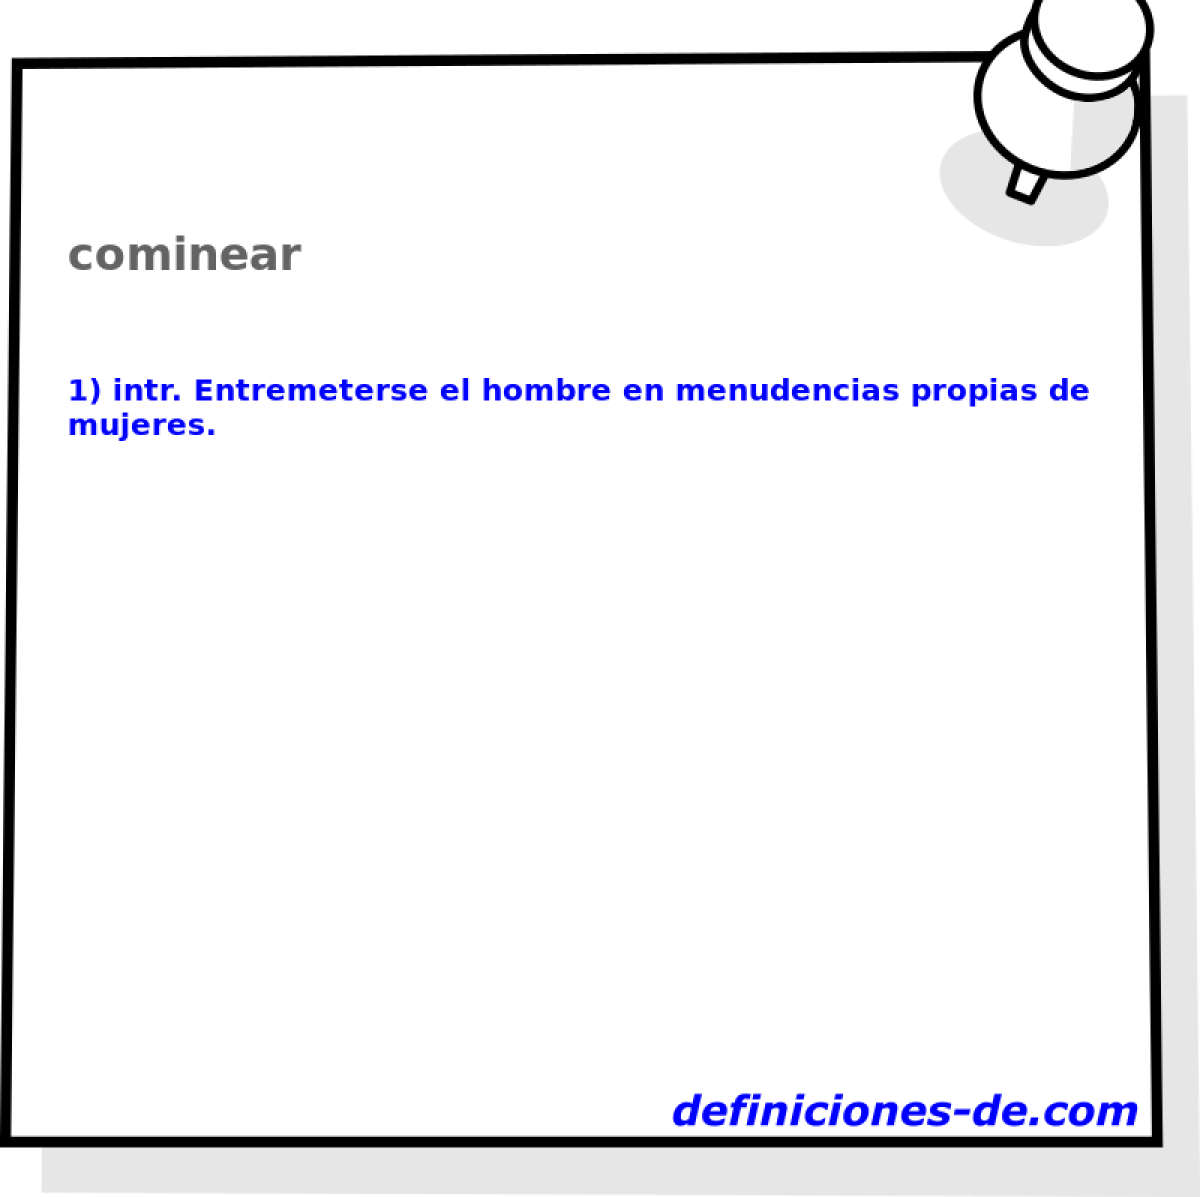 cominear 